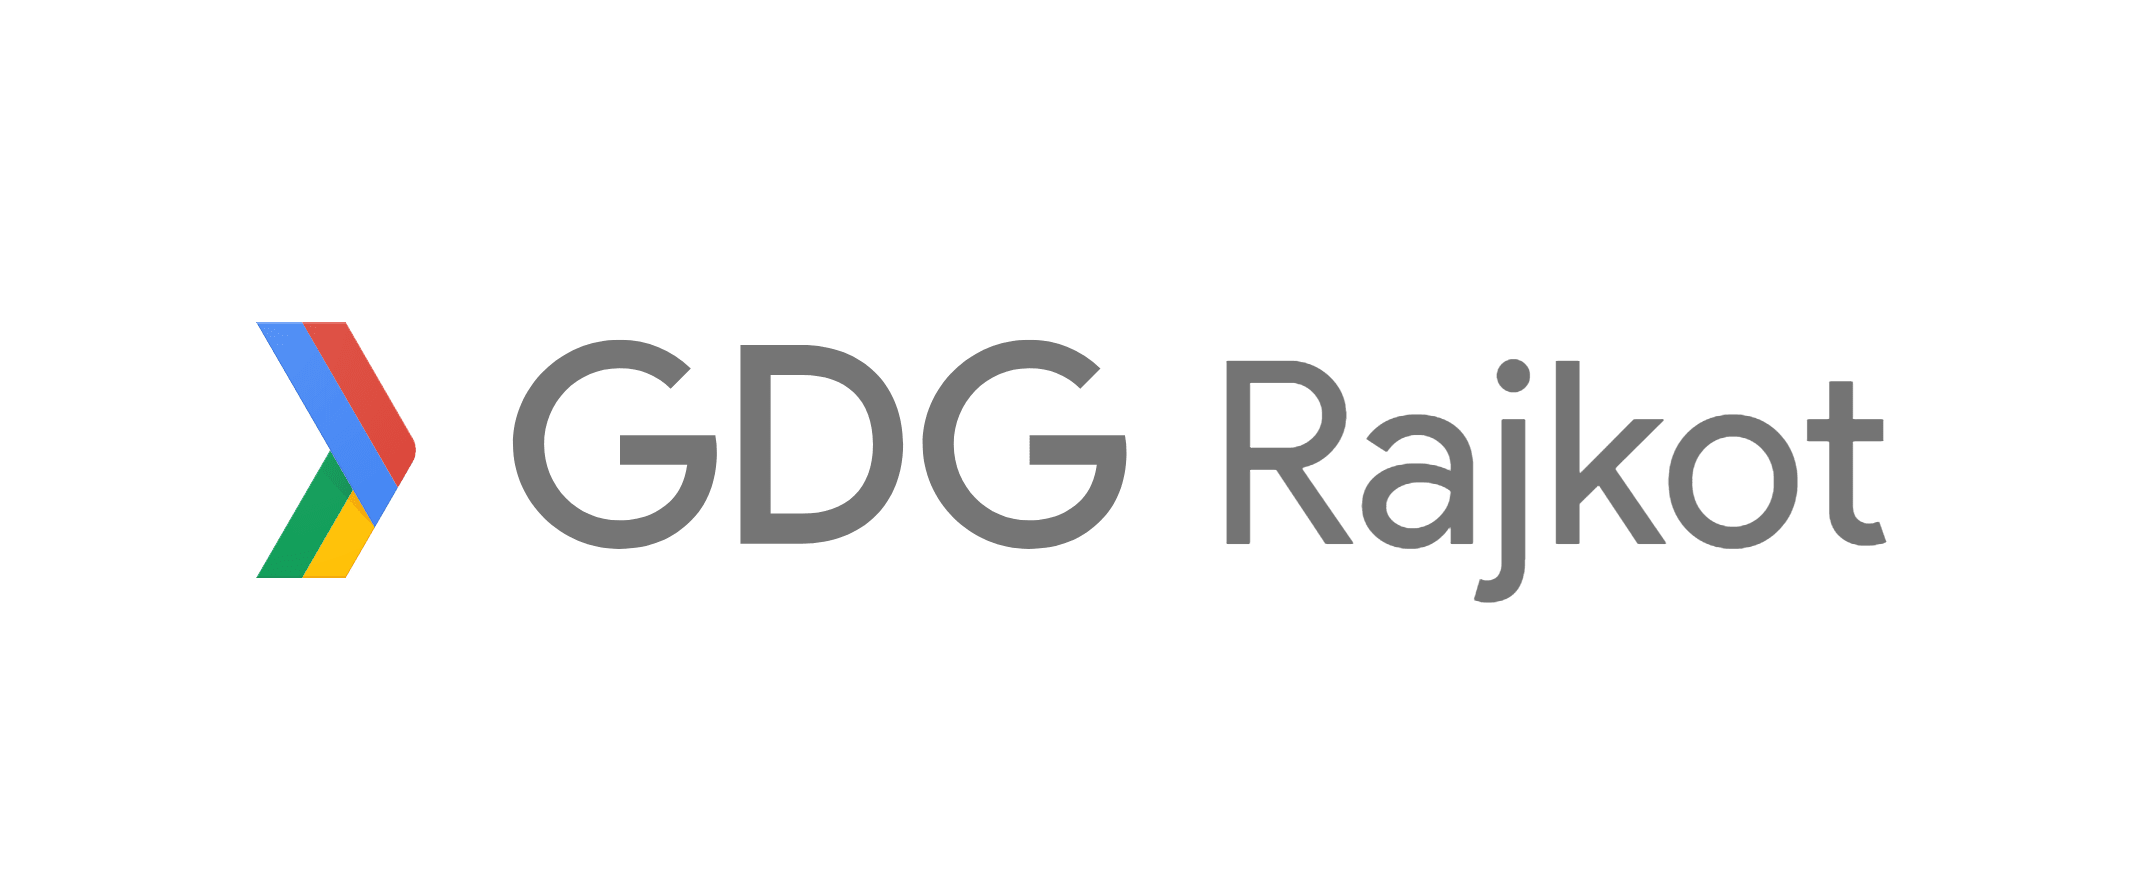 Google Developers Group Rajkot logo